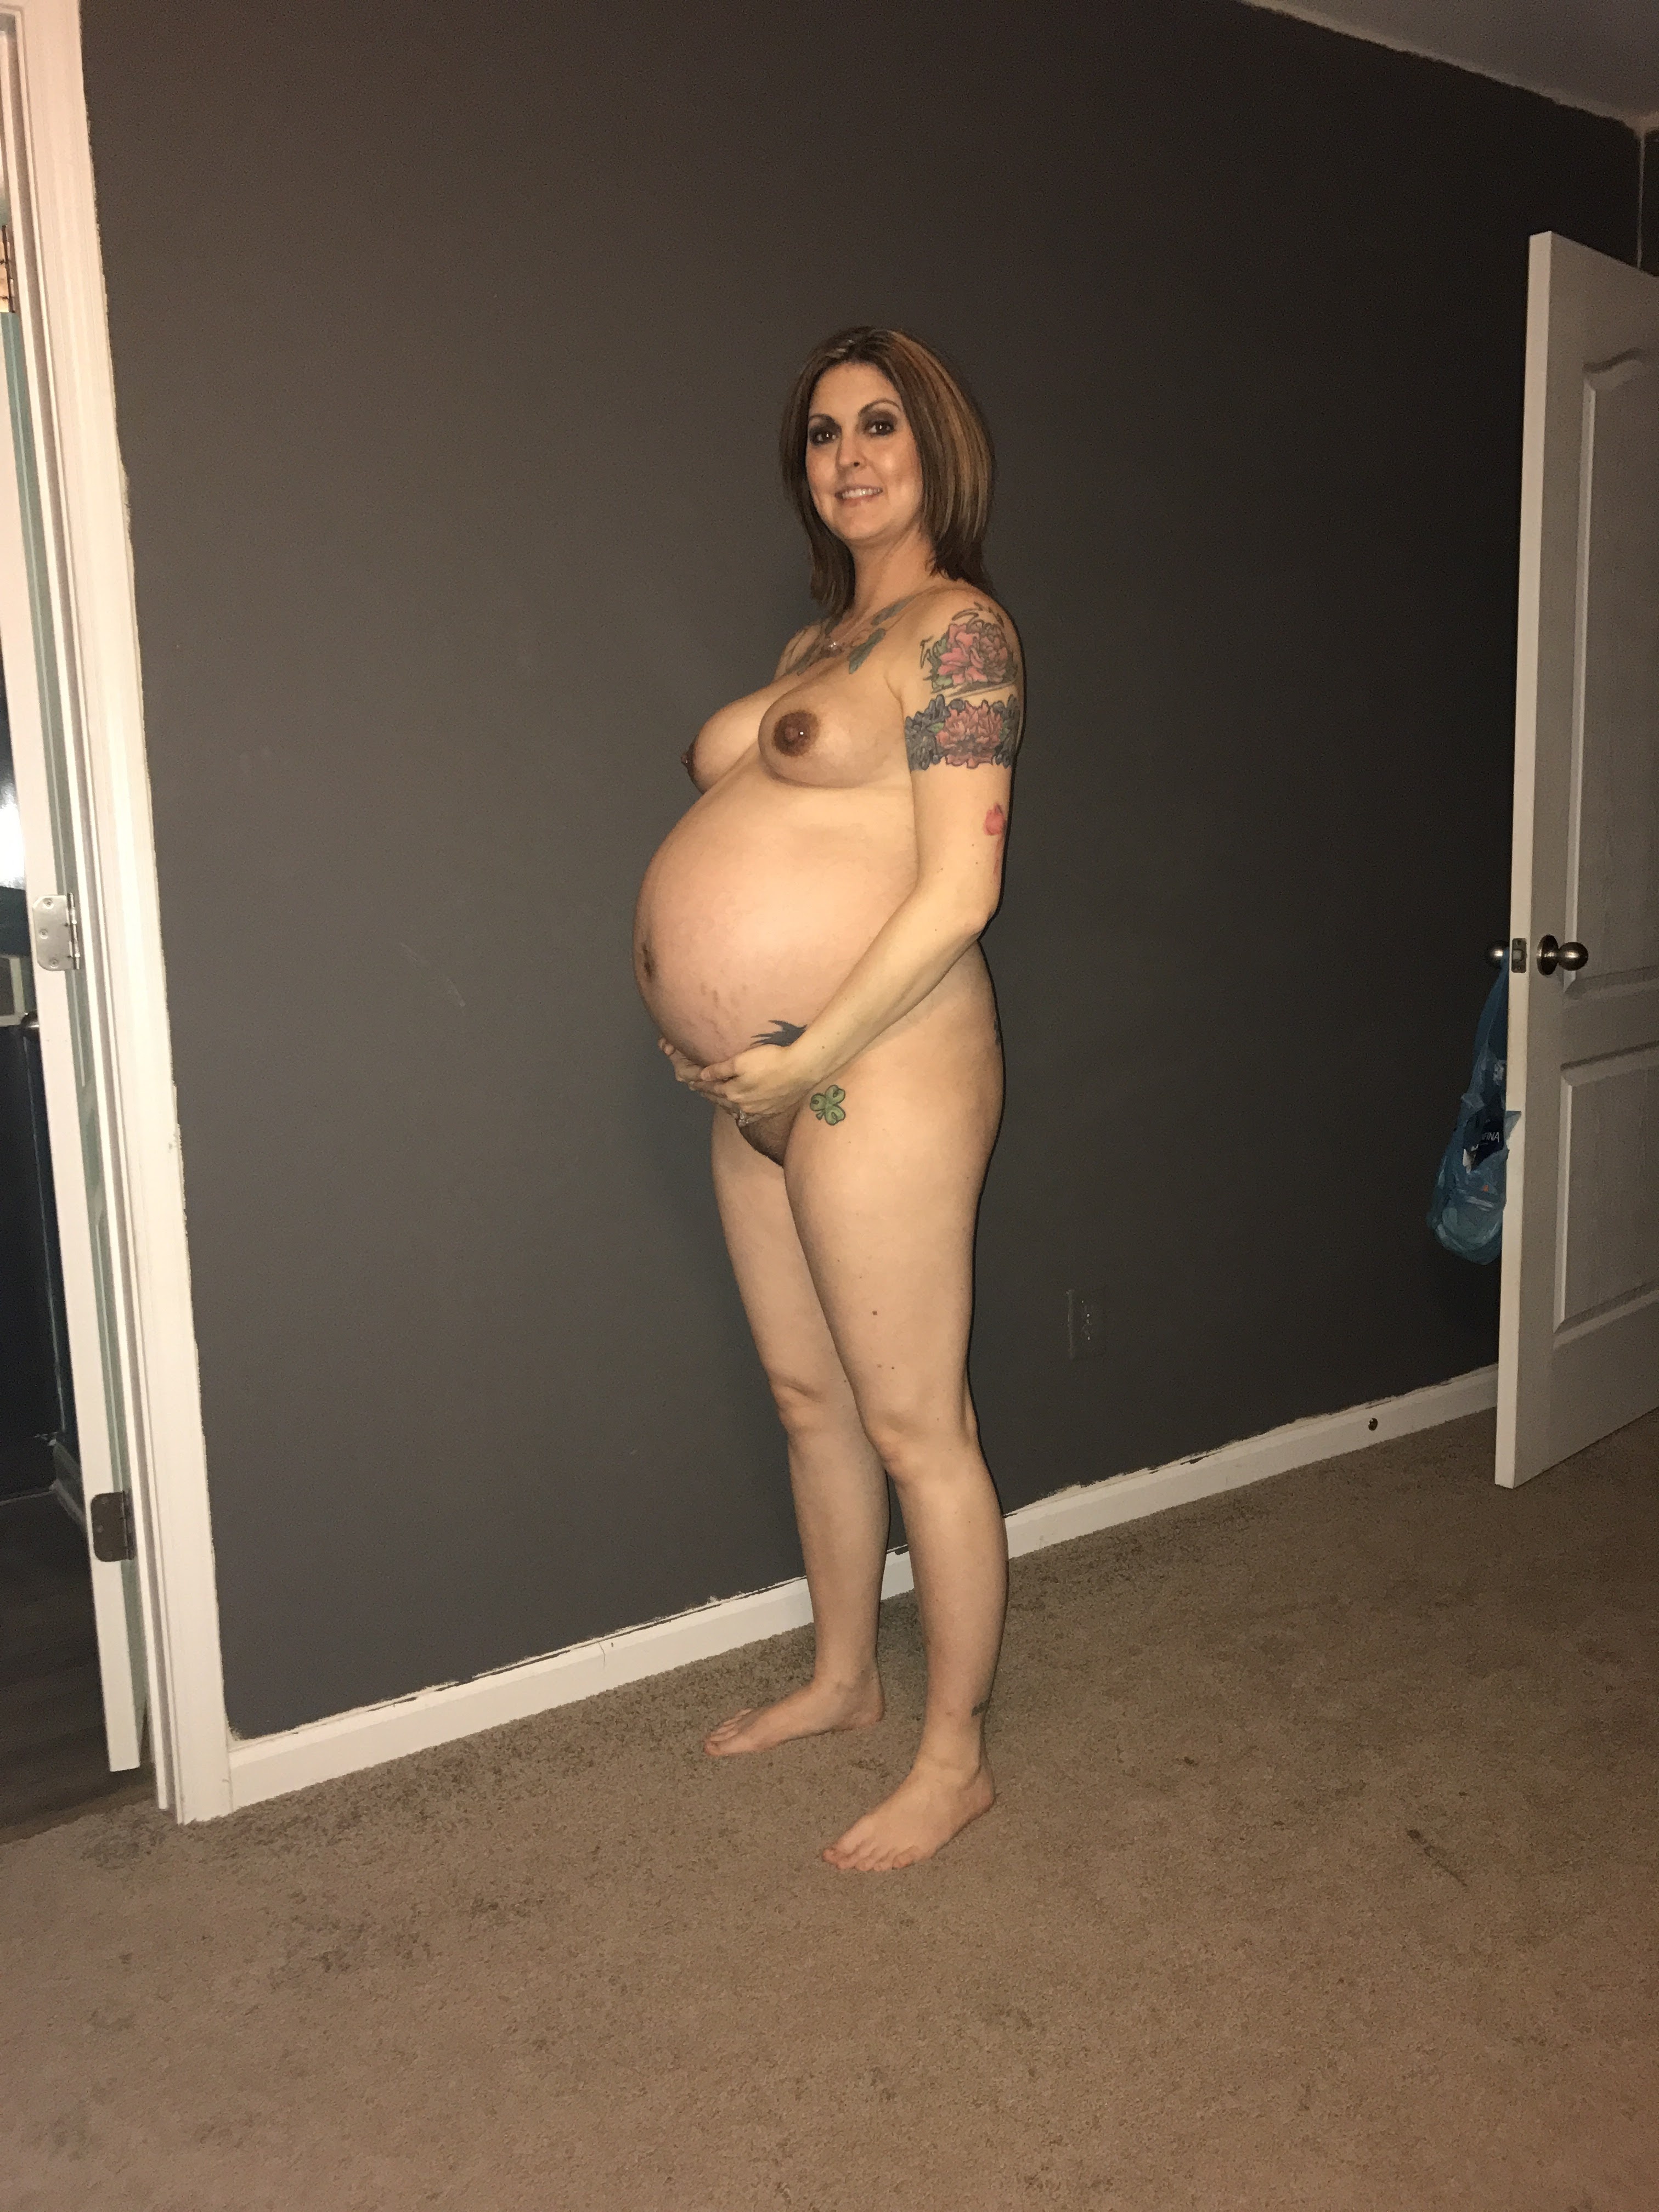 Pregnant candid porn